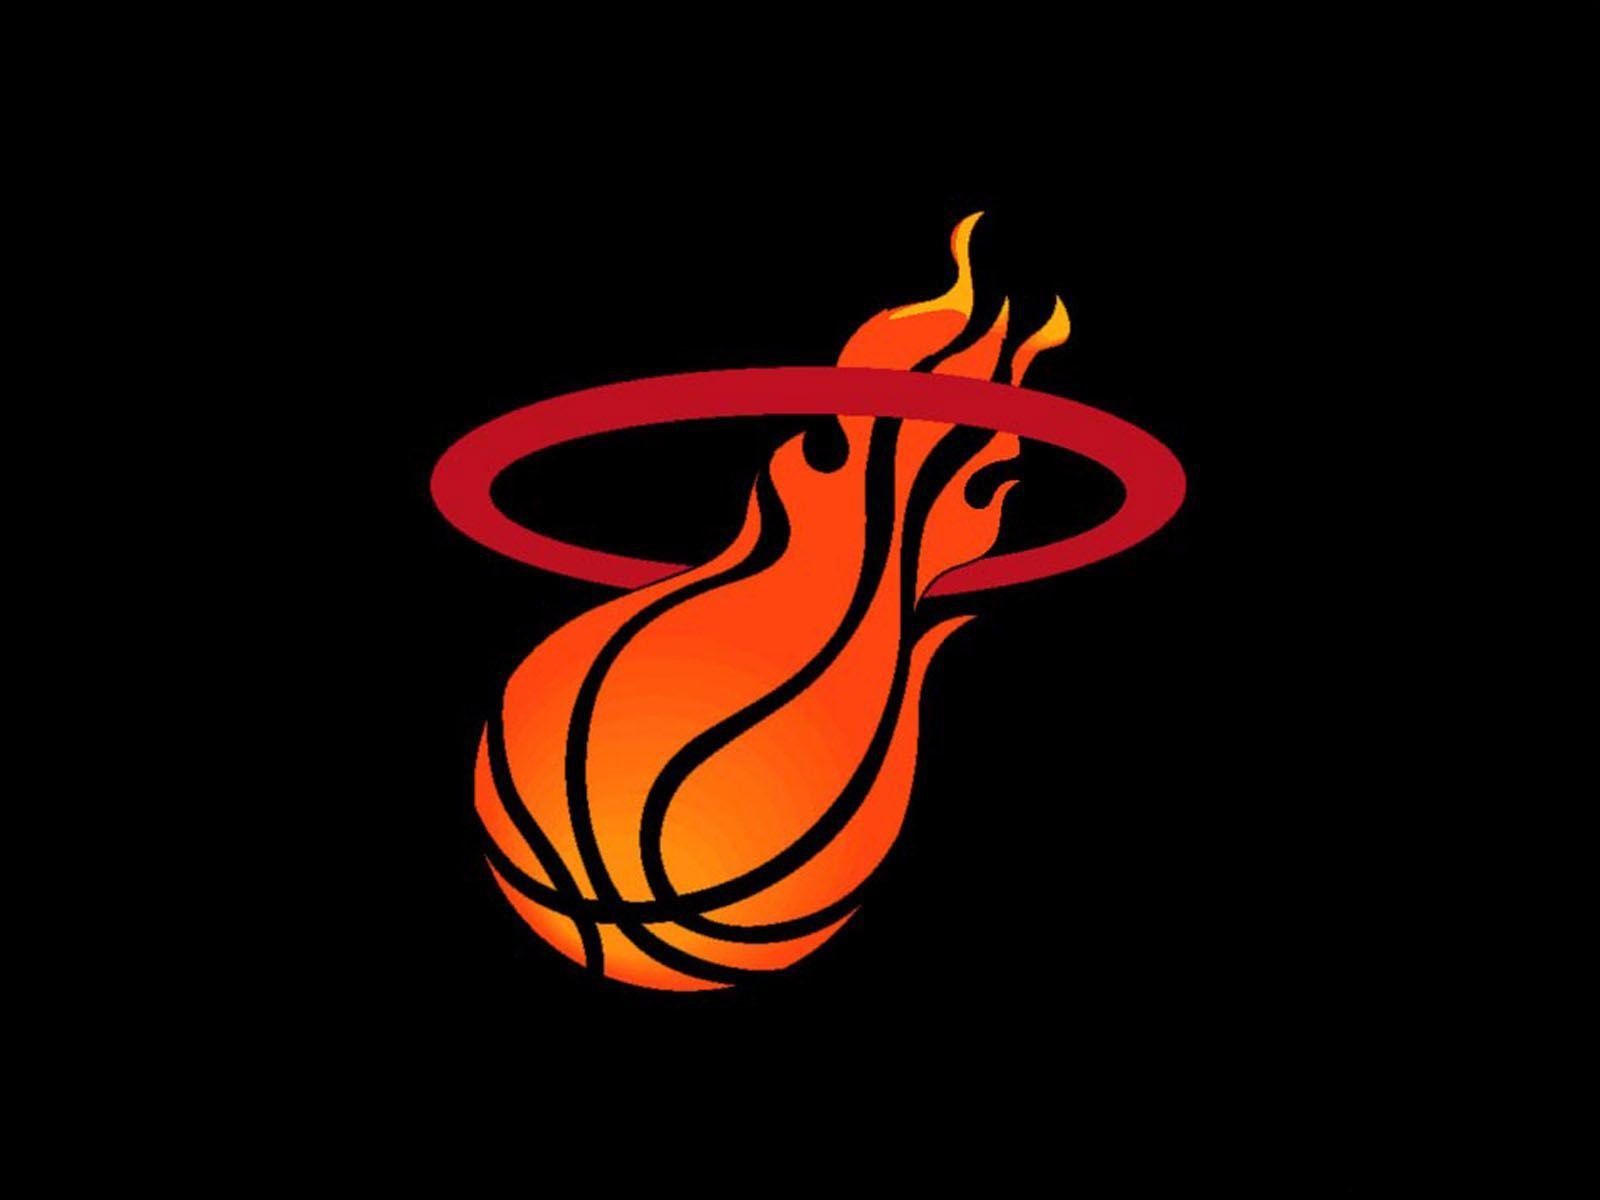 Miami Heat Basketball Club Logos HD Wallpaper 2013 All About